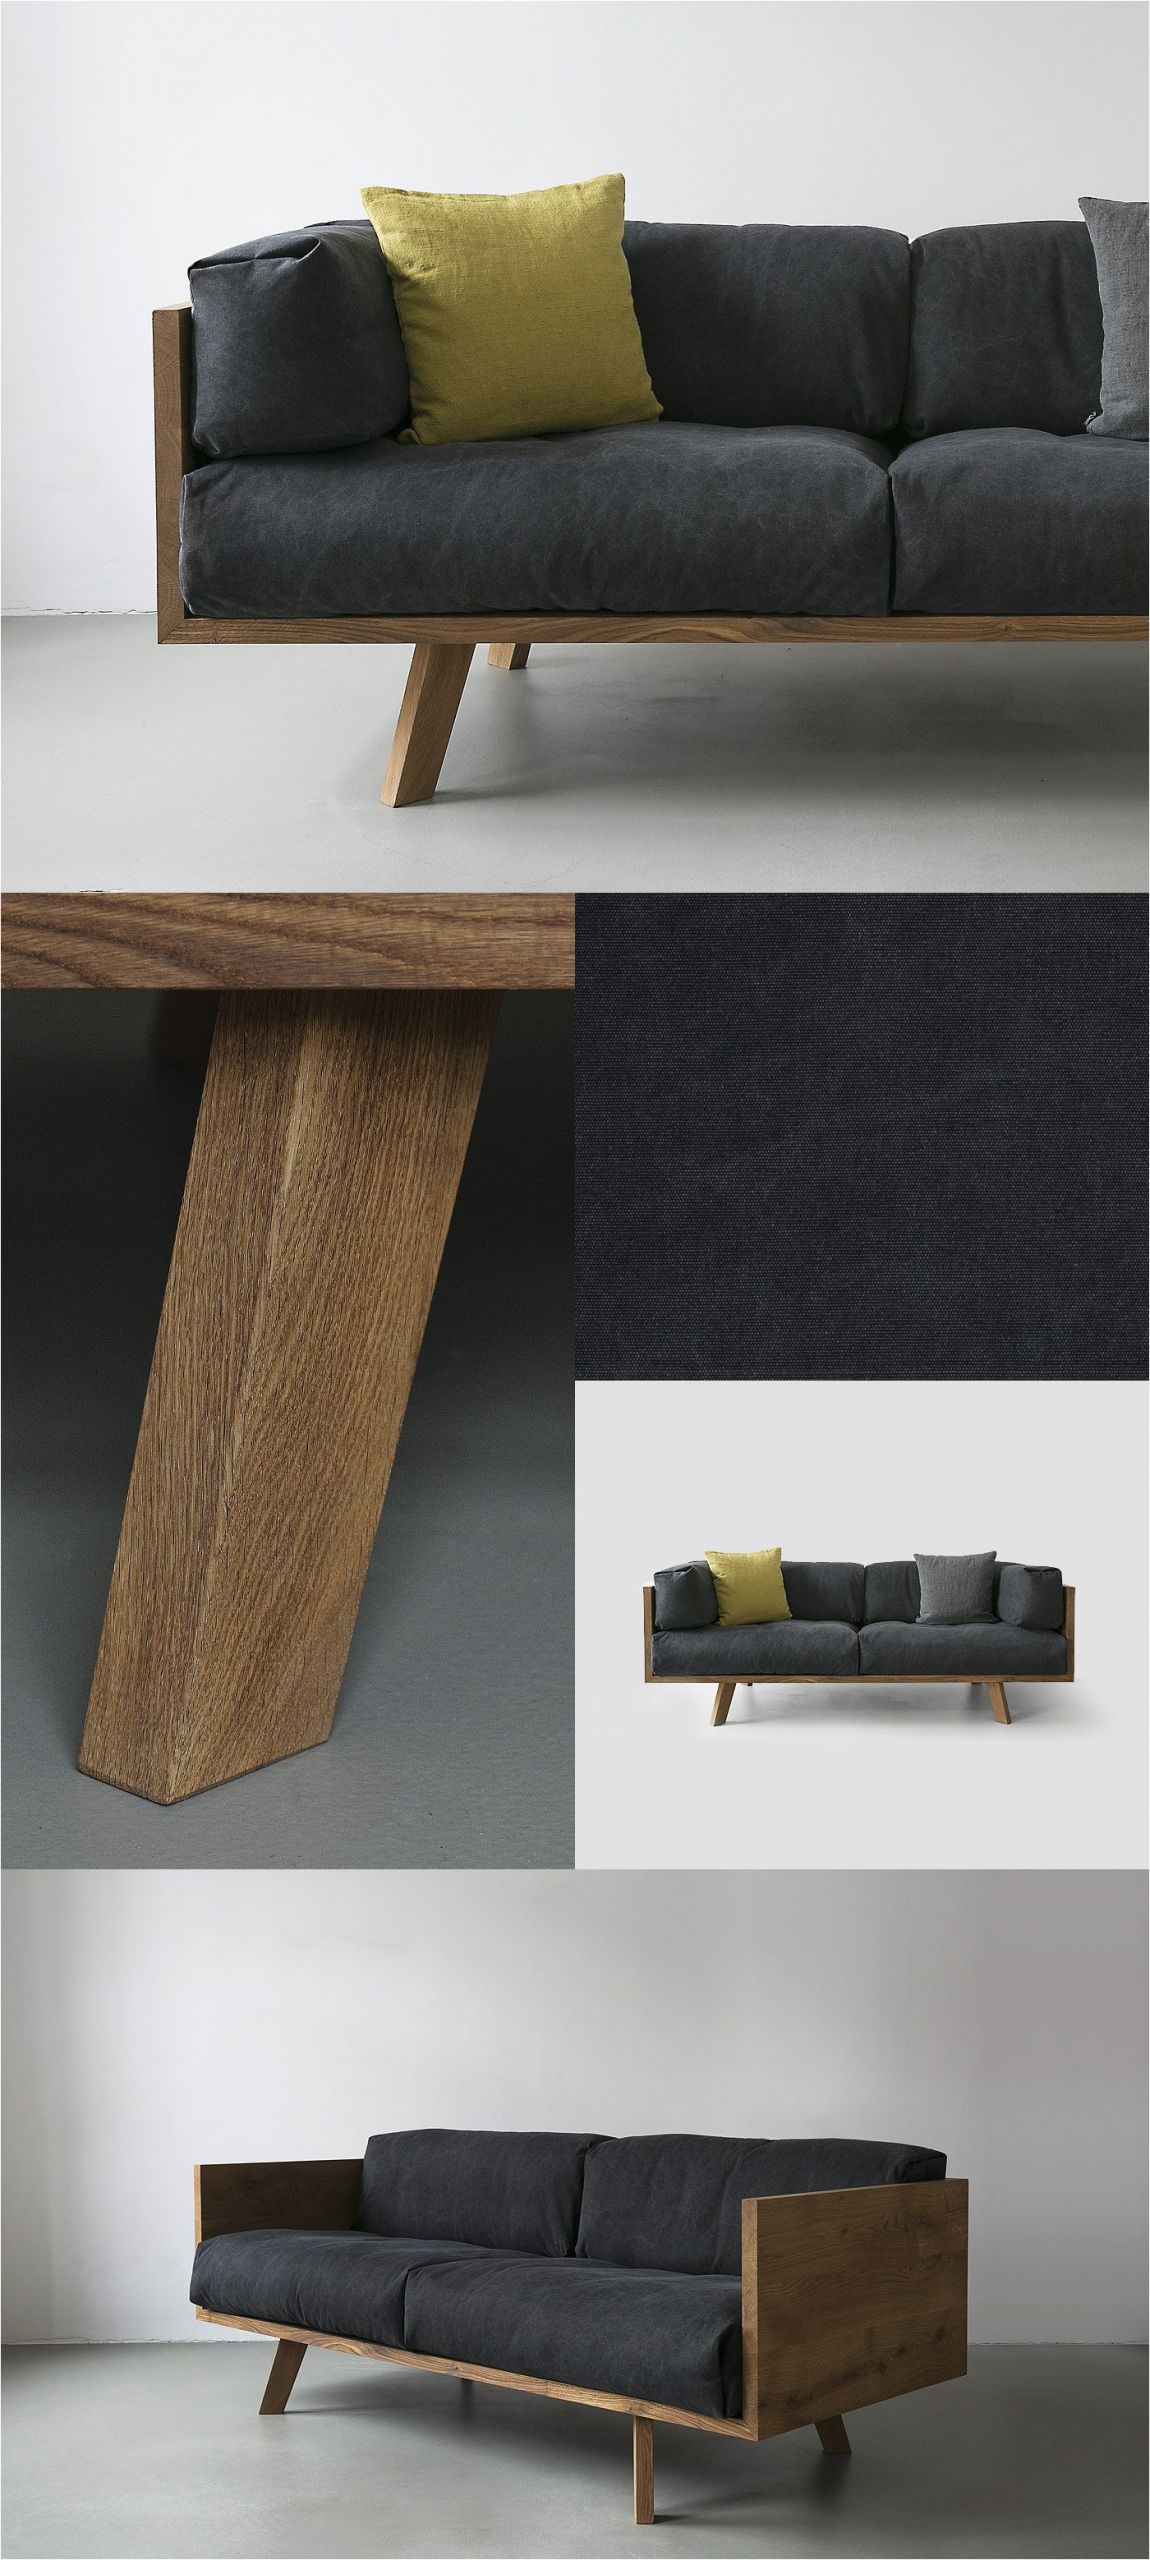 Sofa Design top View Diy Furniture I Möbel Selber Bauen I Couch sofa Daybed I